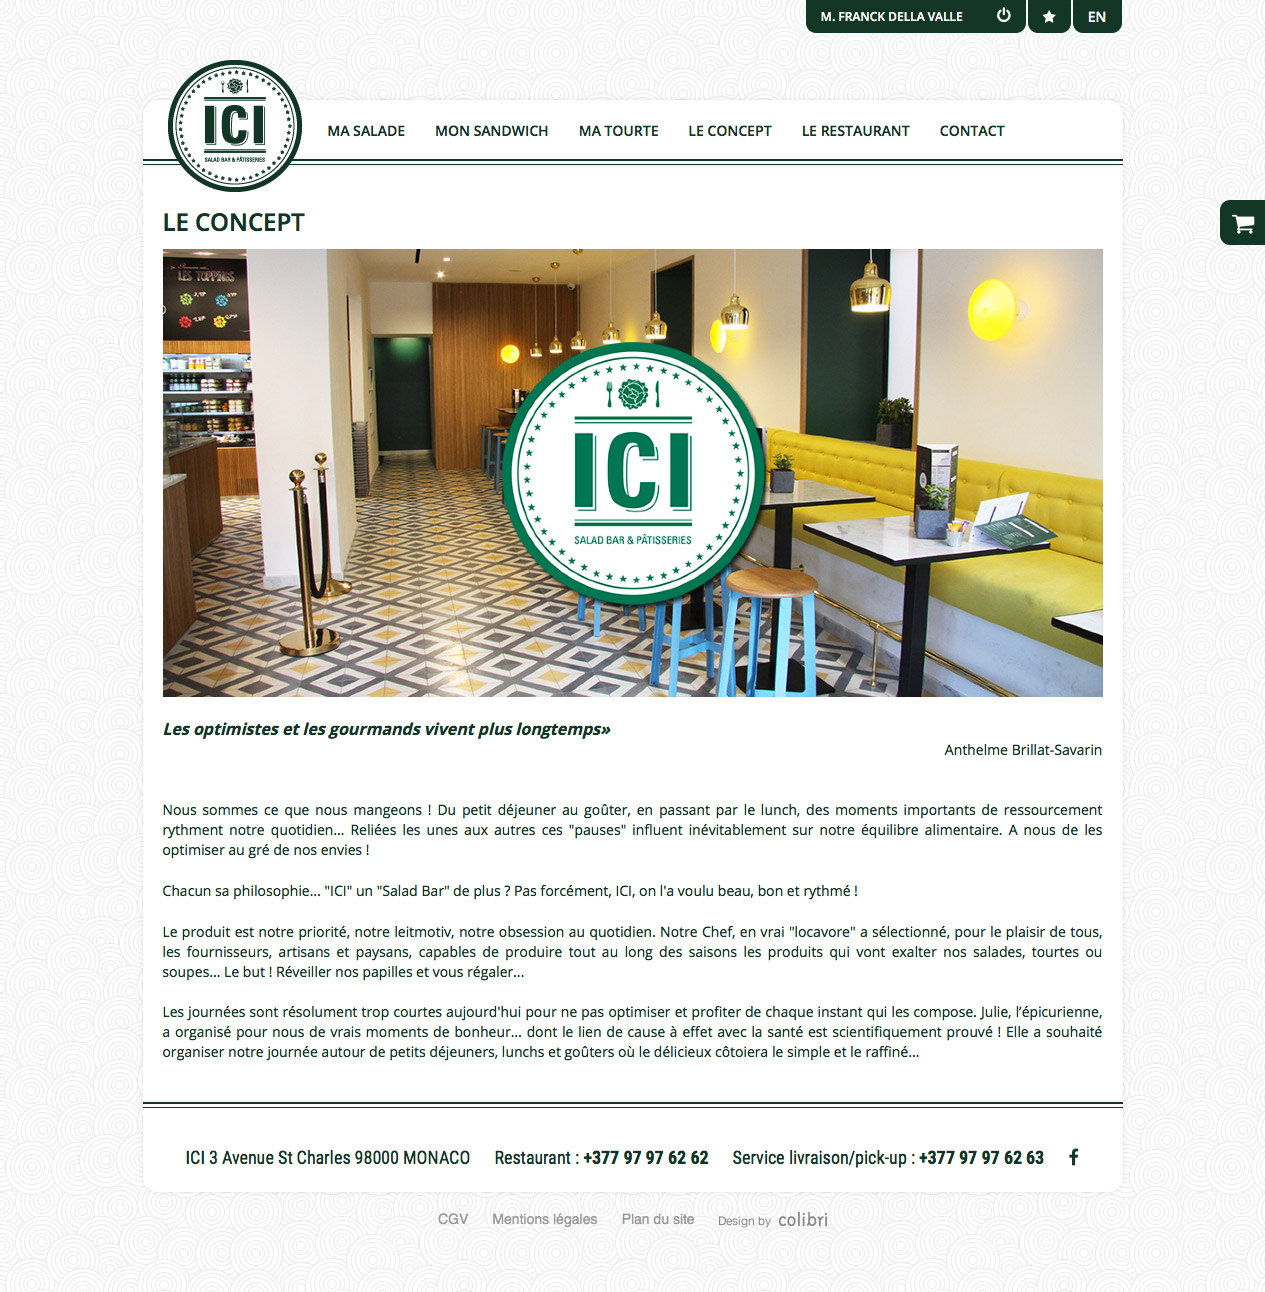 Ici - salad bar - Ici - Salad bar - Agence Colibri, Design - Création du site internet ici-saladbar.com - 2